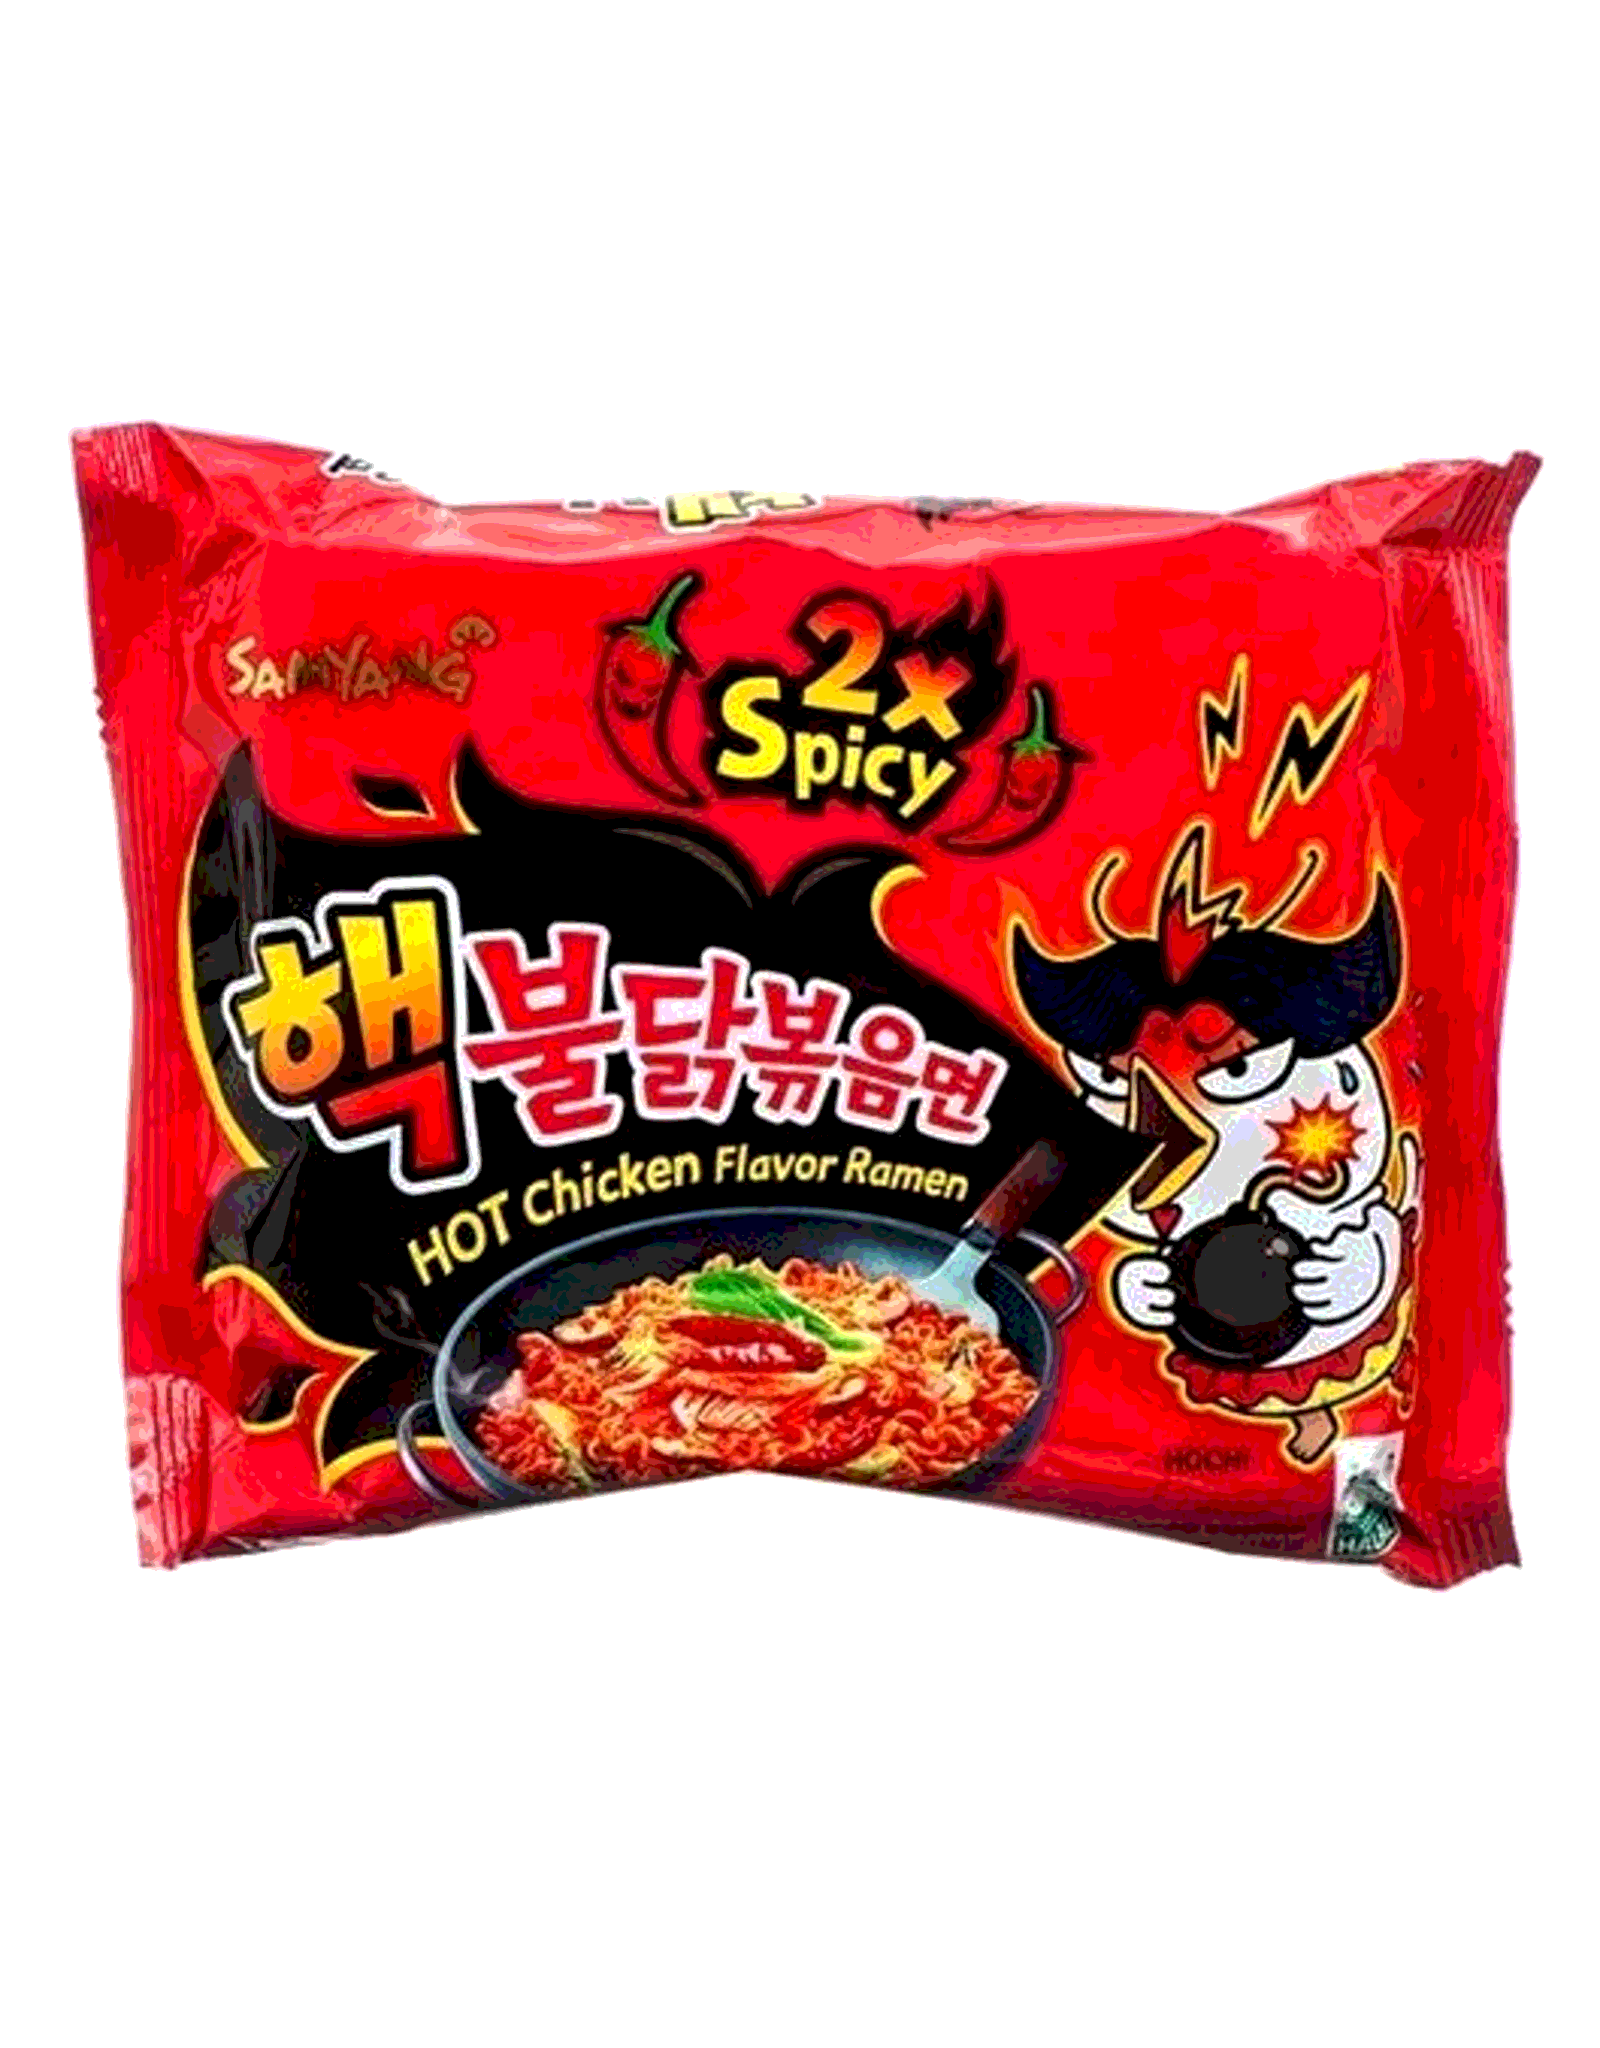 Samyang лапша 2x Spicy. Samyang 2x Spicy hot Chicken flavor. Samyang 2x Spicy Noodles. Samyang x2 рамен. Лапша spicy